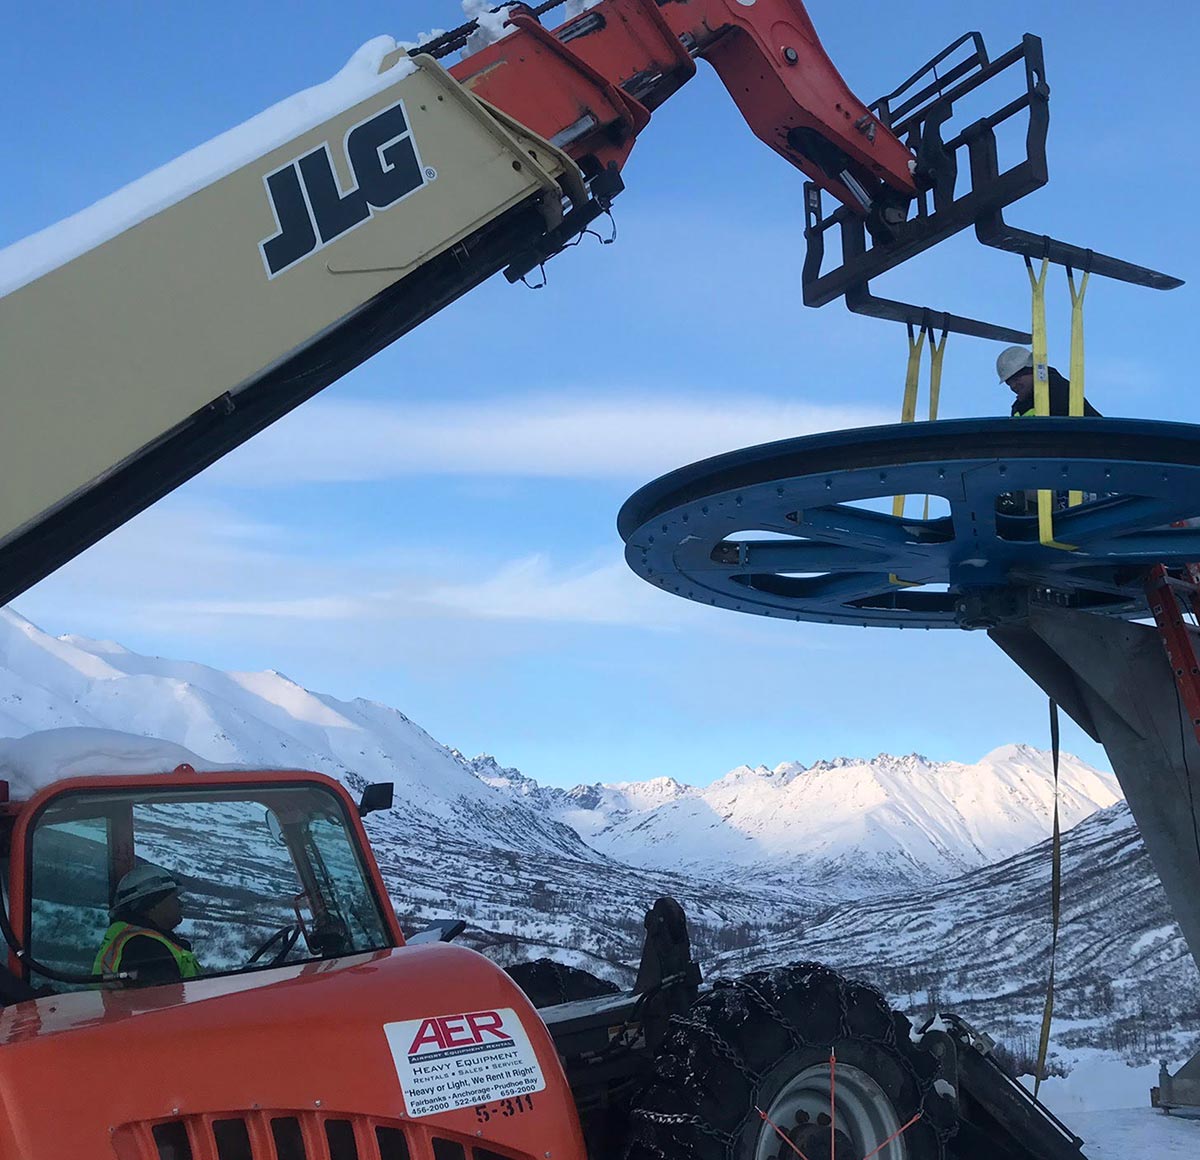 Remote Alaska Solutions sets the upper bullwheel at Skeetawk